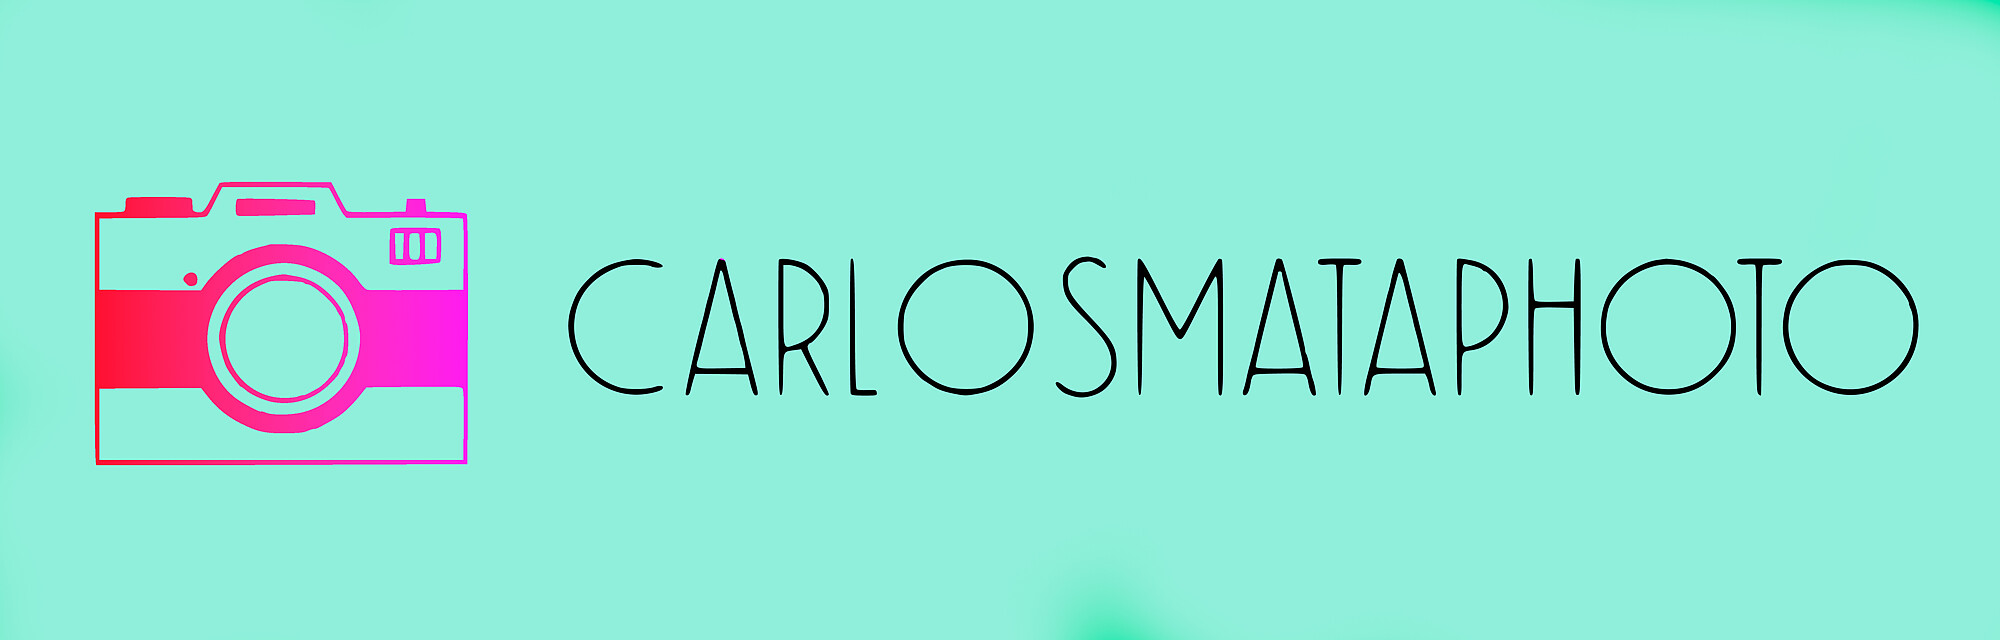 carlosmataphoto - logo-cm-verde.jpg